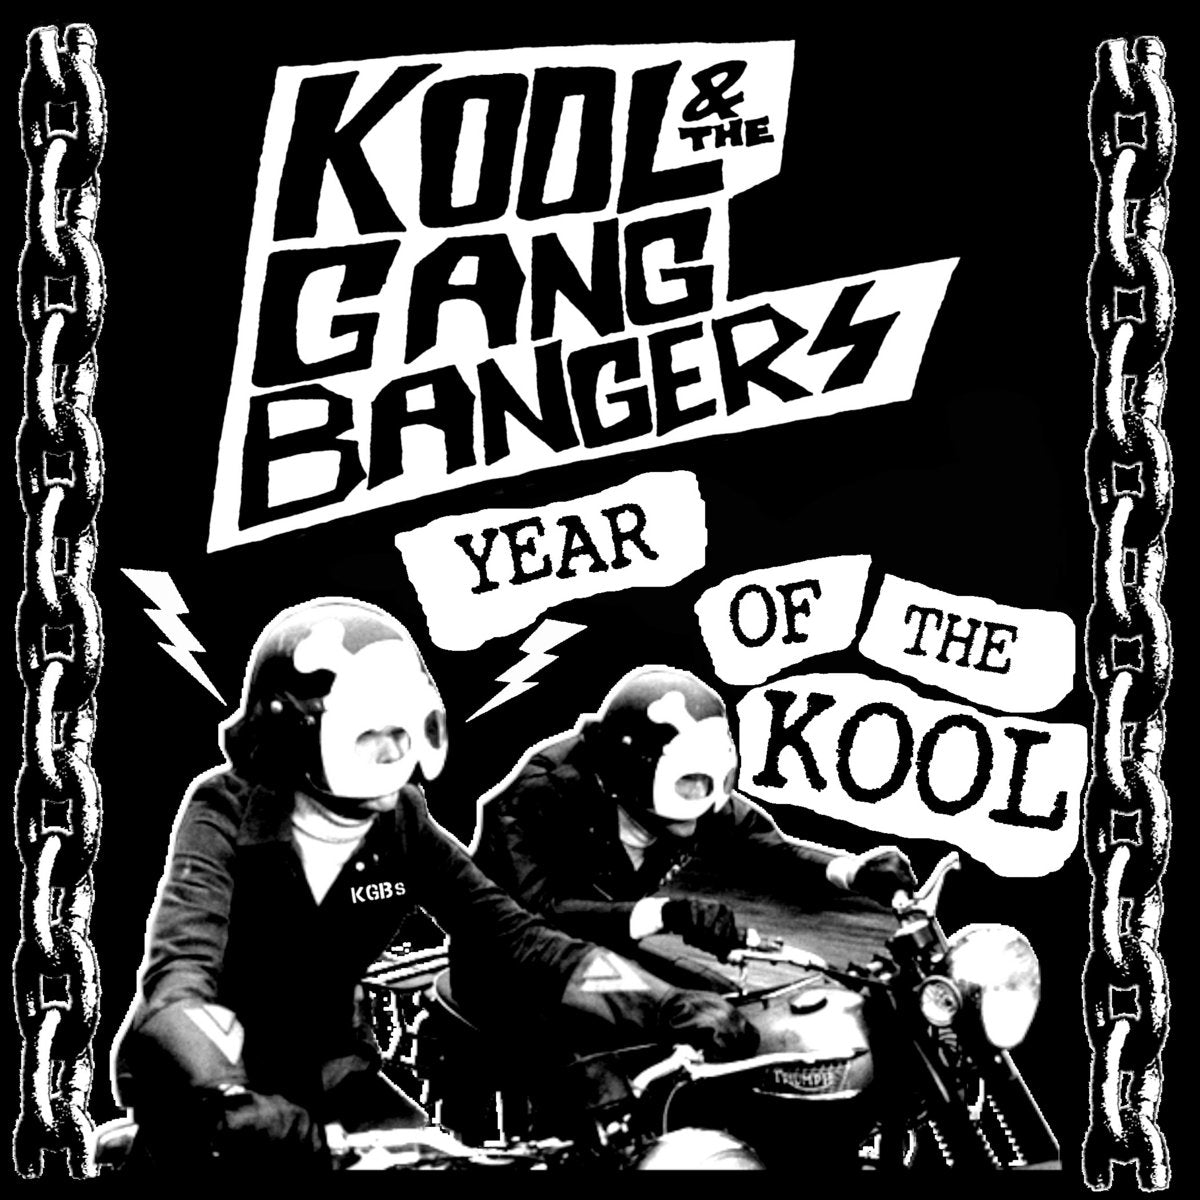 Kool & The Ganbangers- Year Of The Kool 7" ~KILLER / LTD INVERTED COVER EDITION!